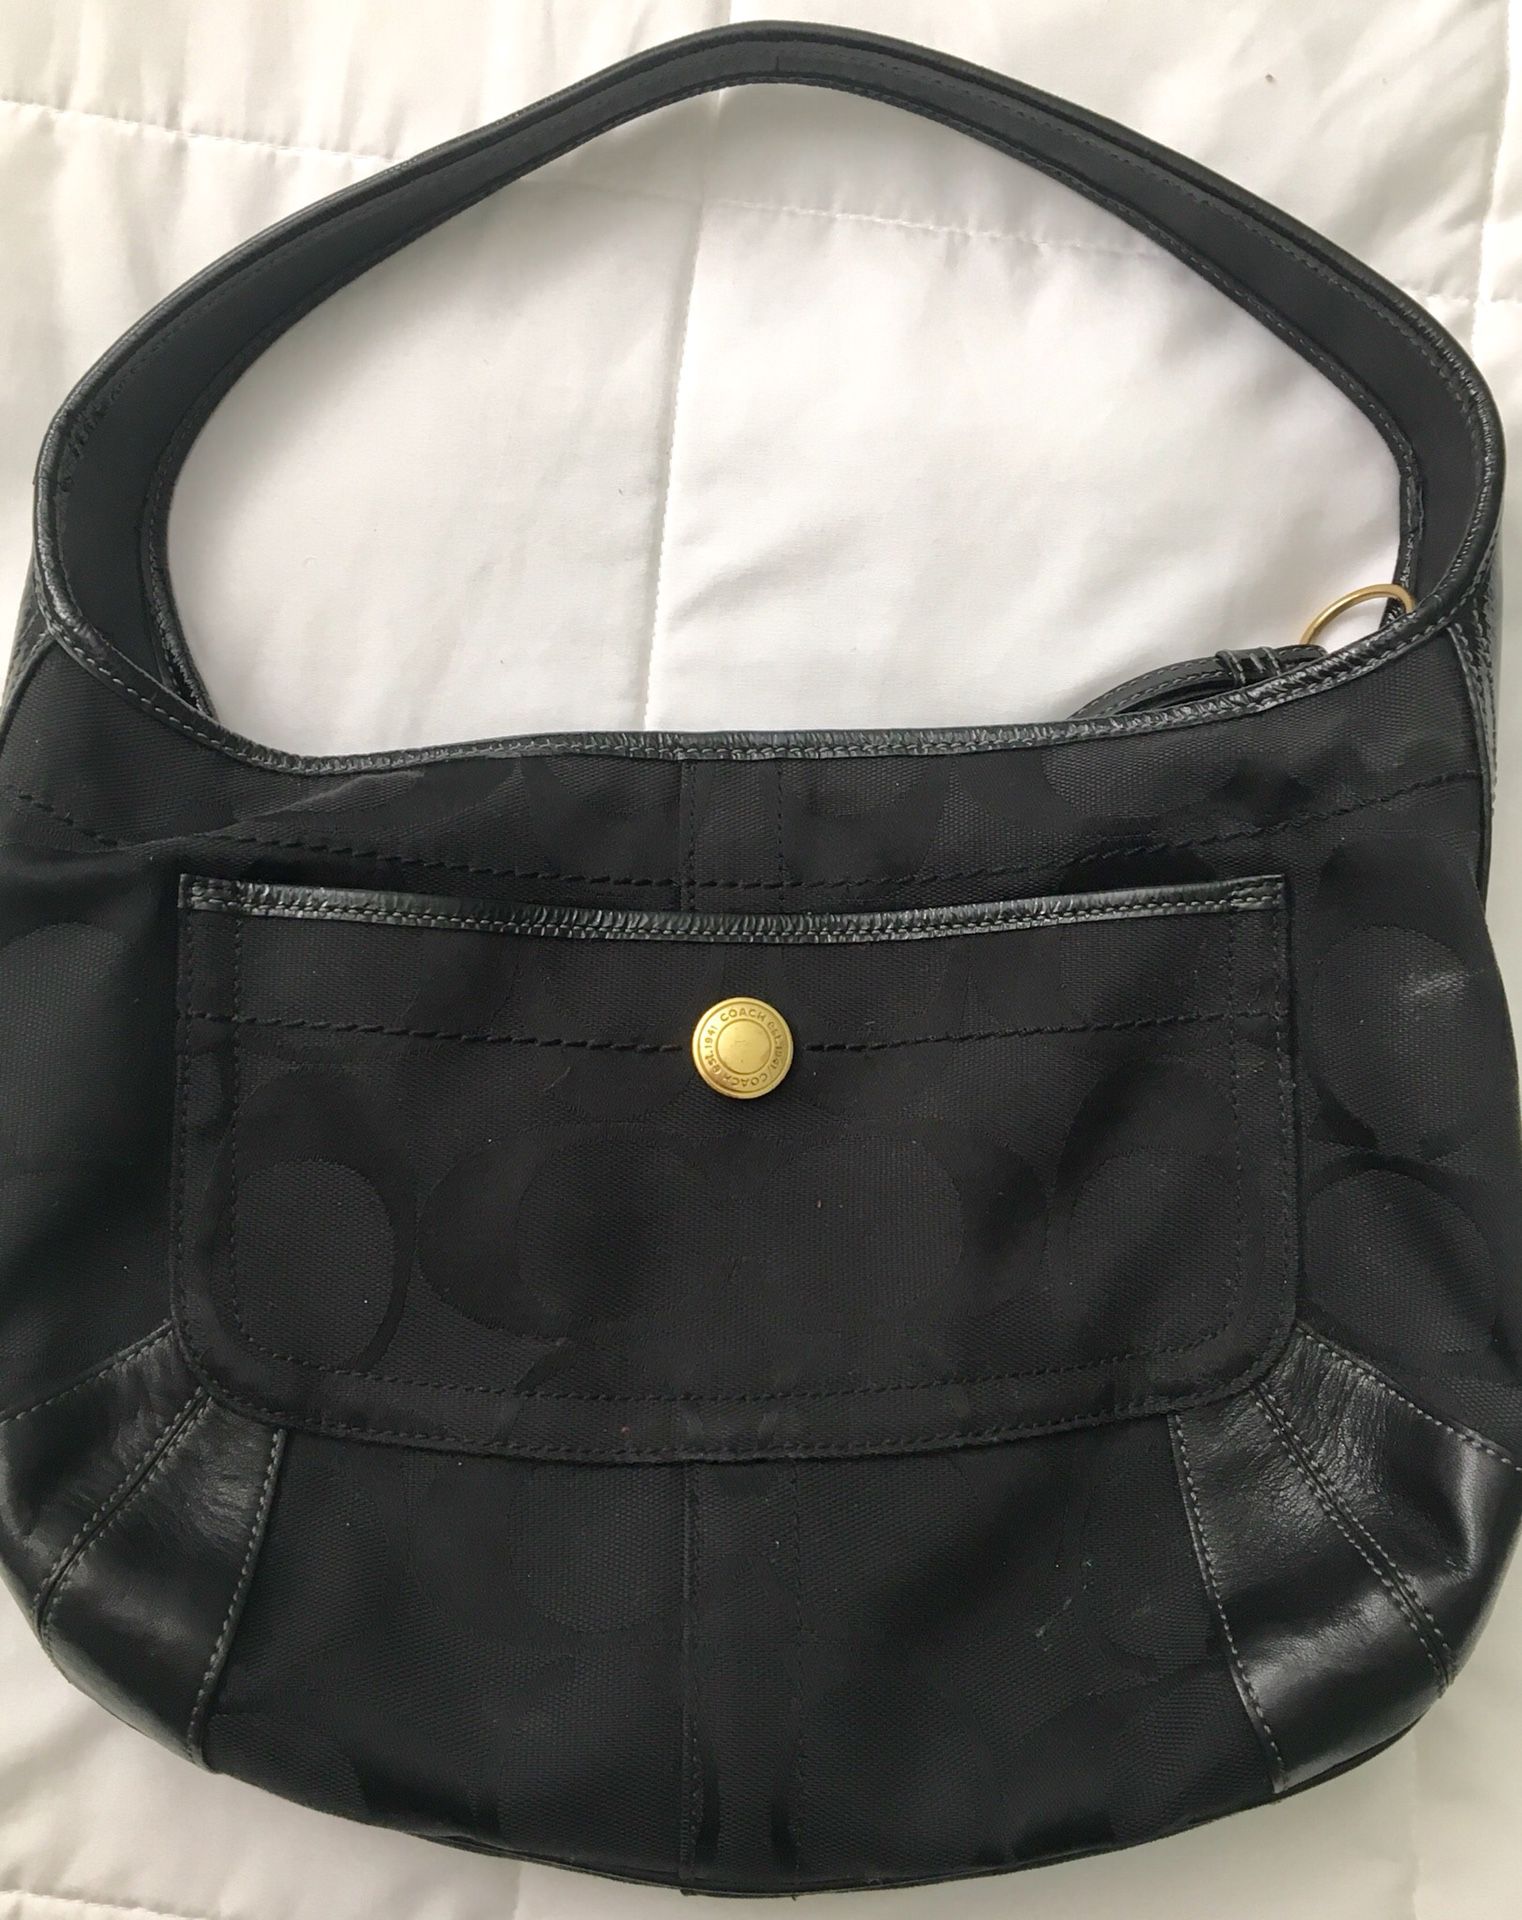 Black and gold signature Coach purse